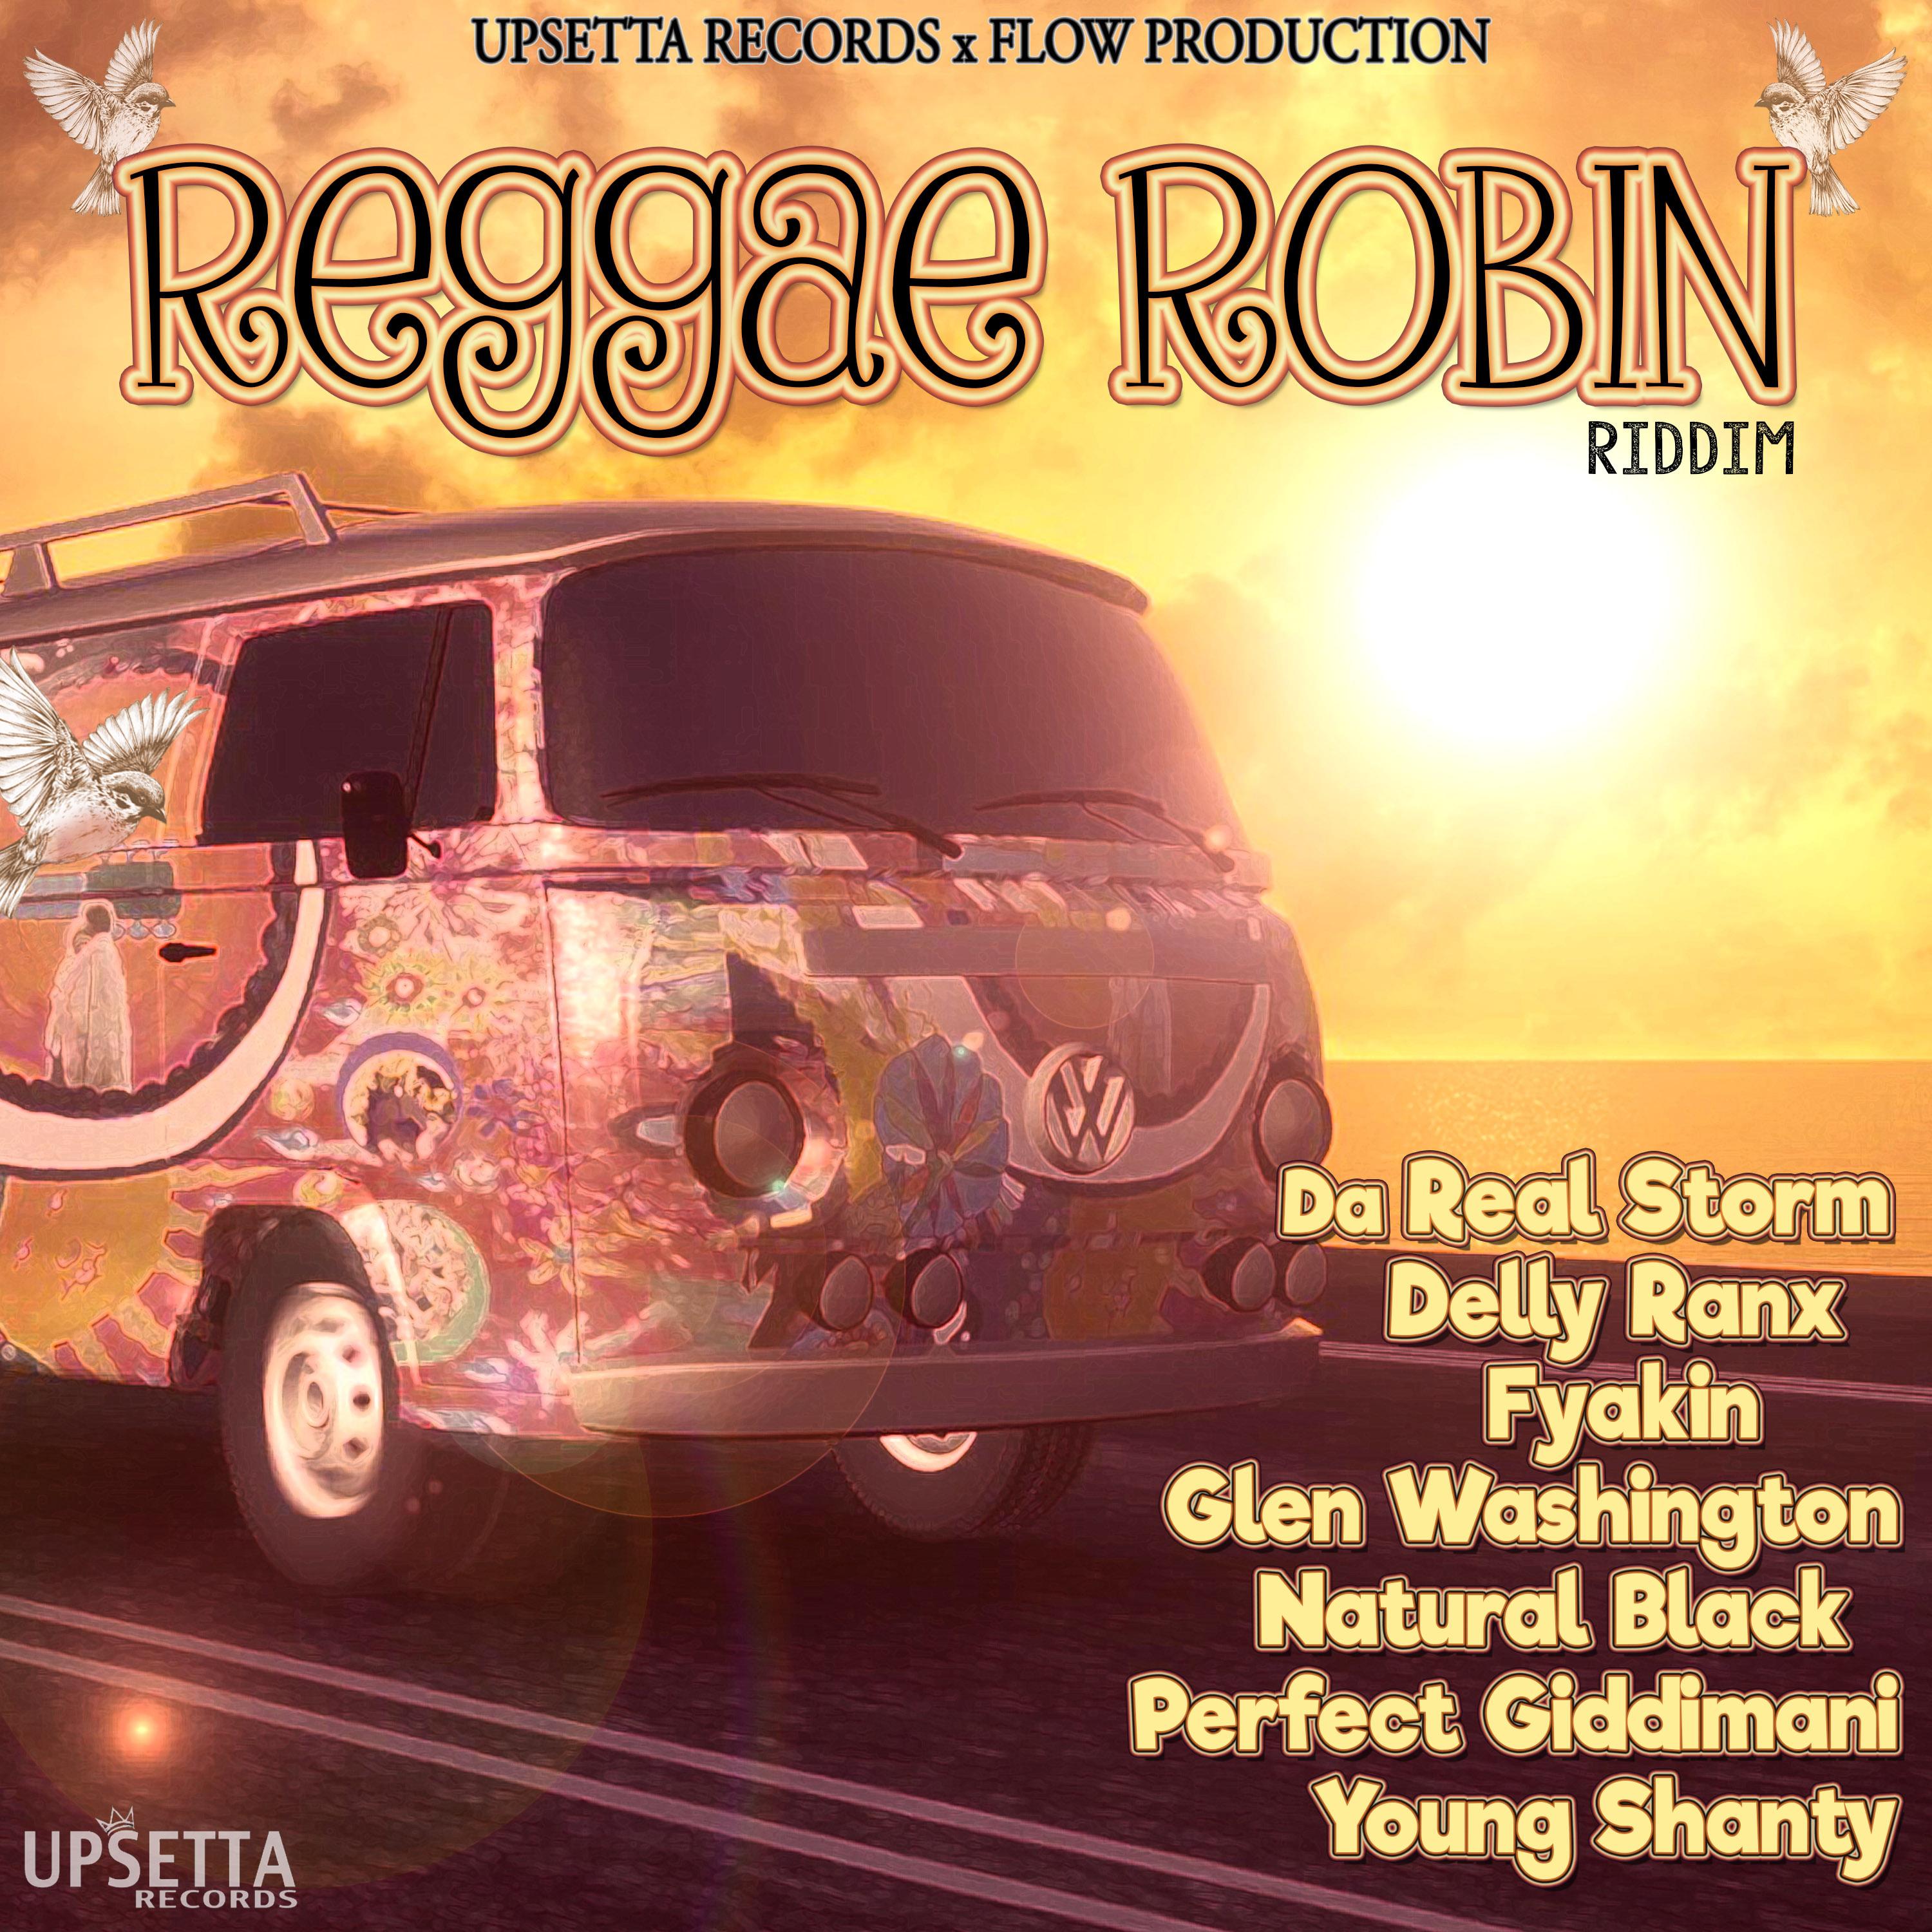 Reggae Robin Riddim